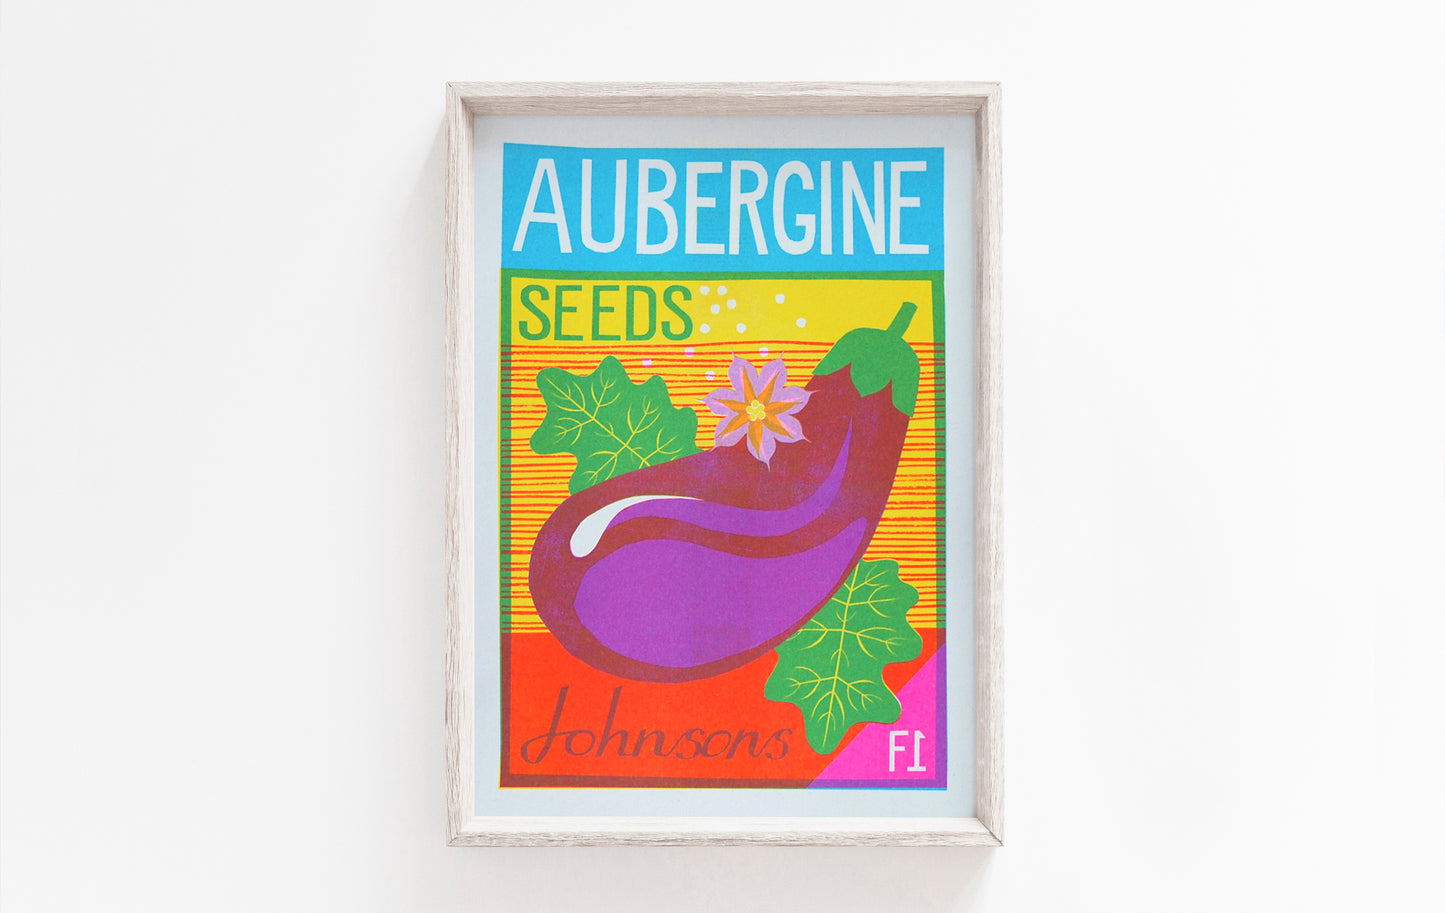 Aubergine Seeds A4 Risograph Print by Printer Johnson - ad&i